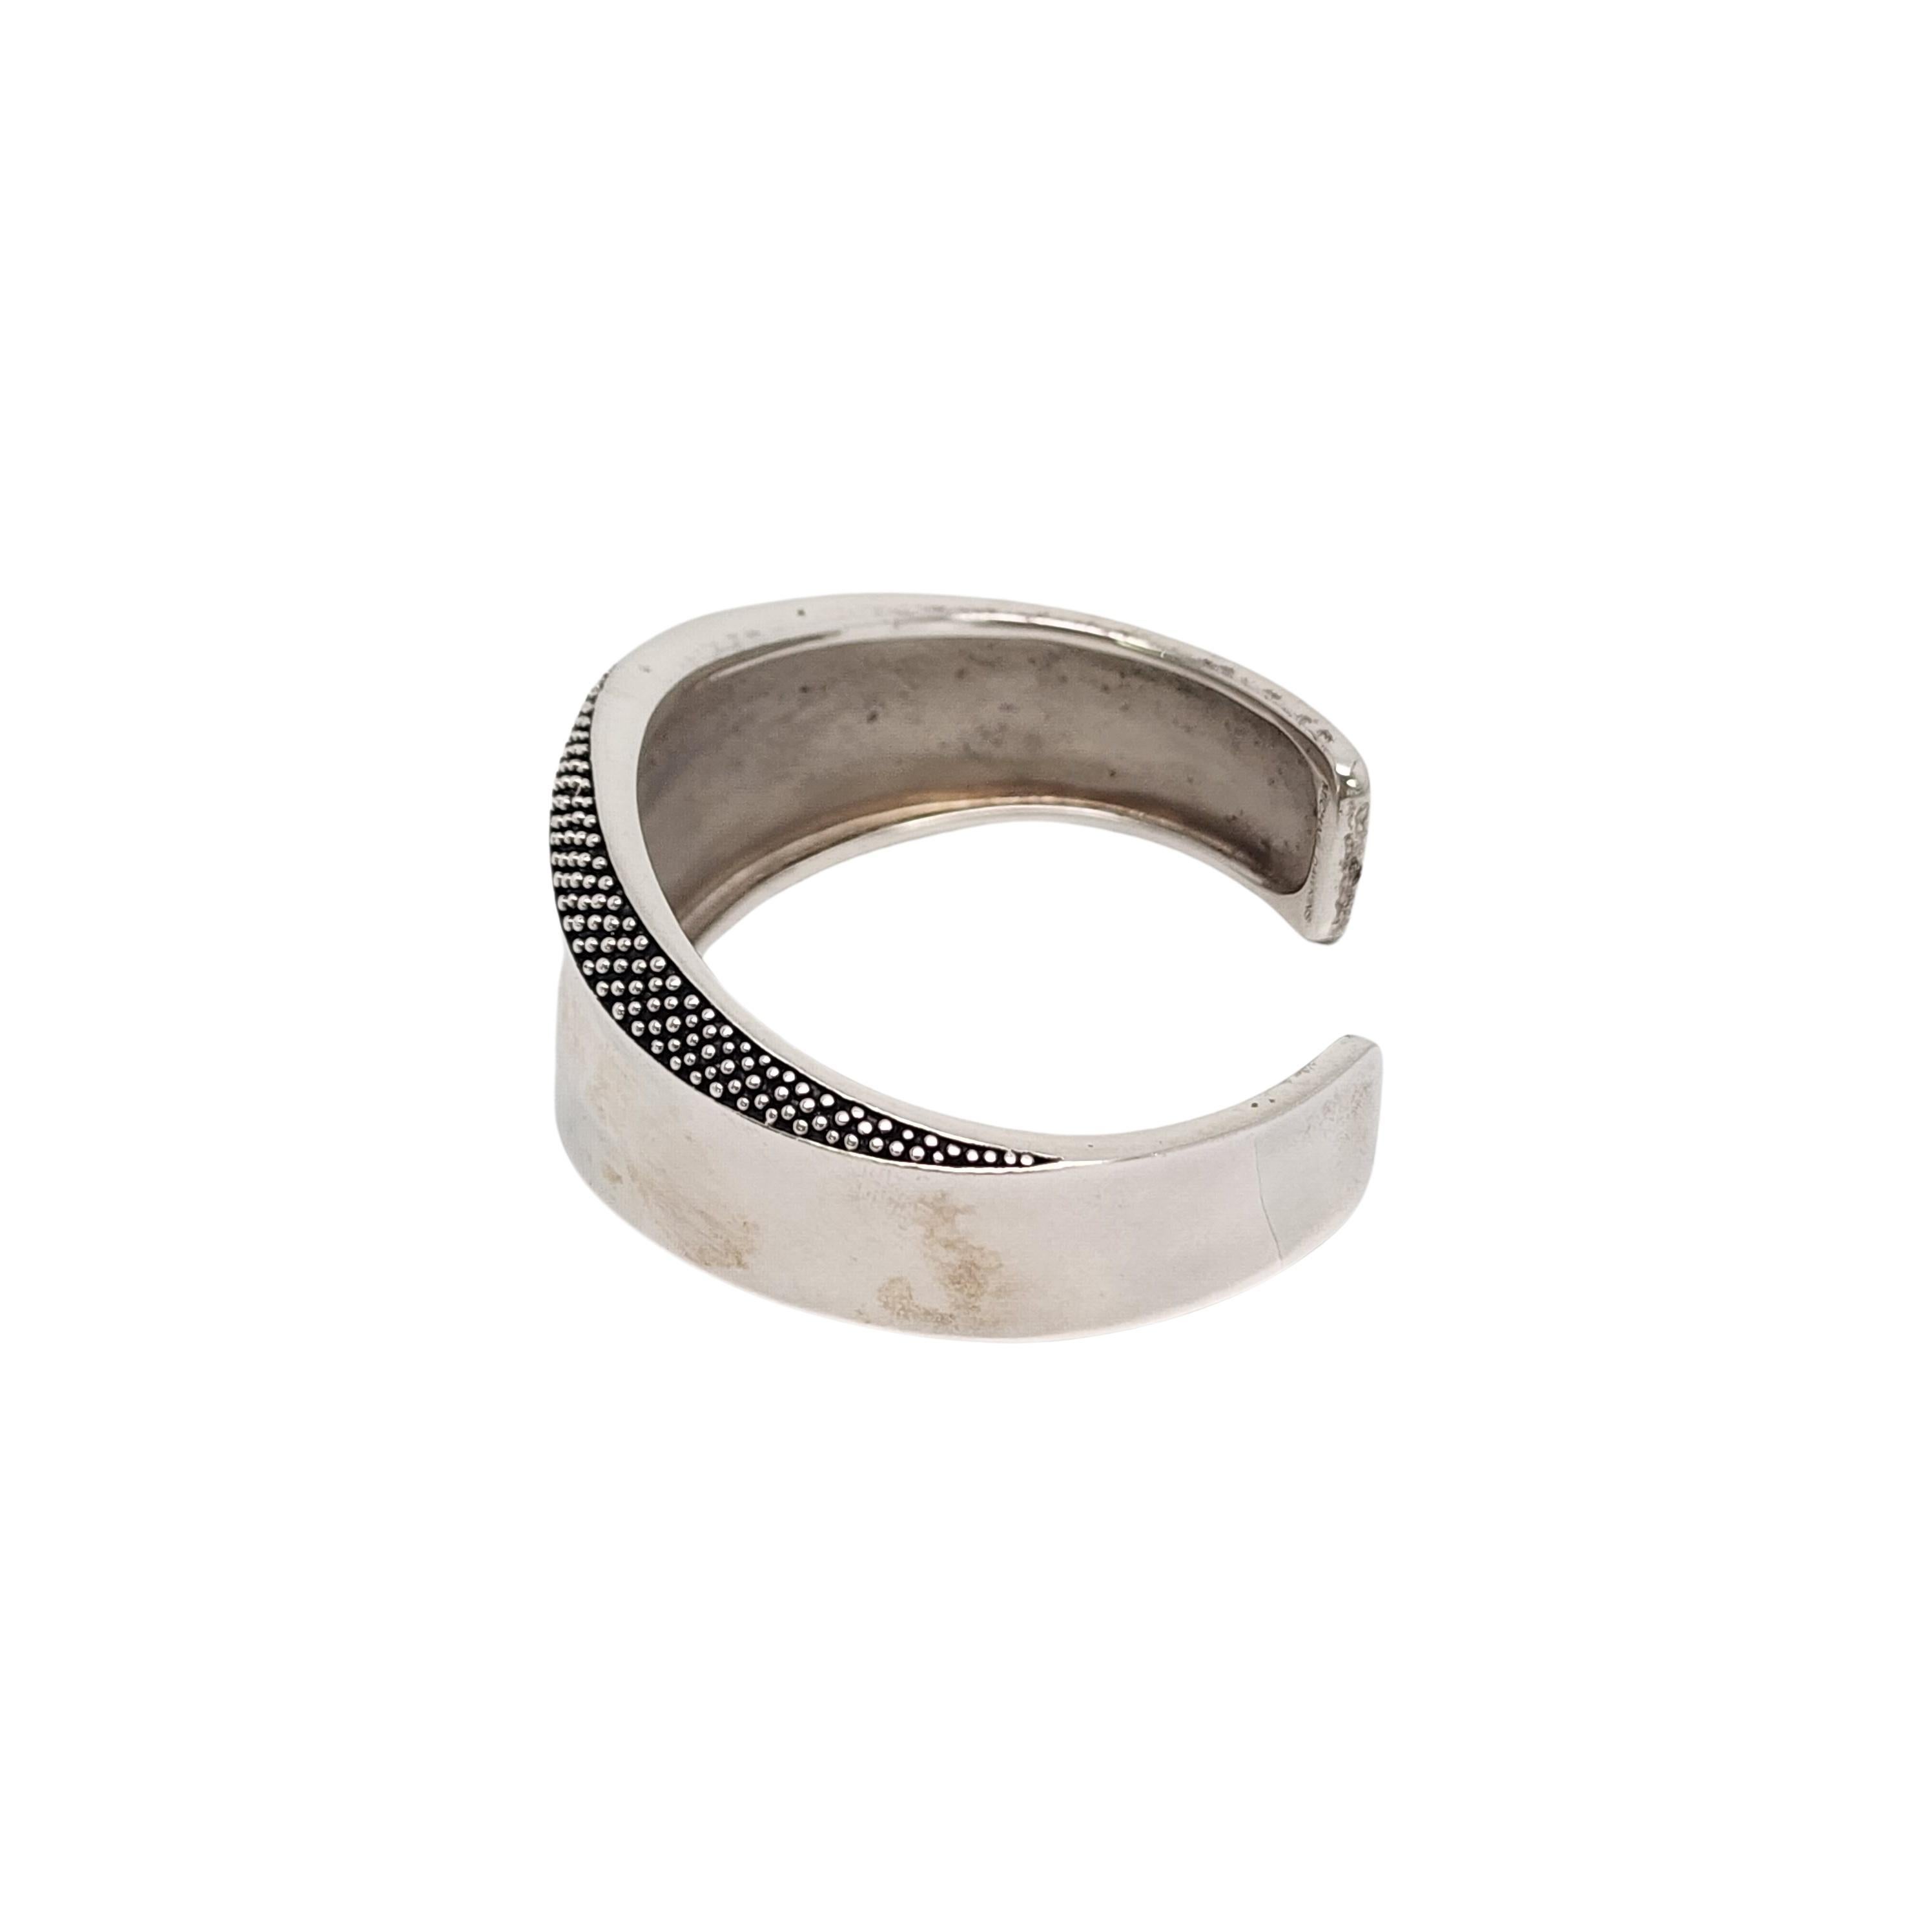 Sterling silver bead granulation cuff bracelet by Michael Dawkins.

Sculptured wave design cuff bracelet featuring bead granulation accents.

Measures approx 7